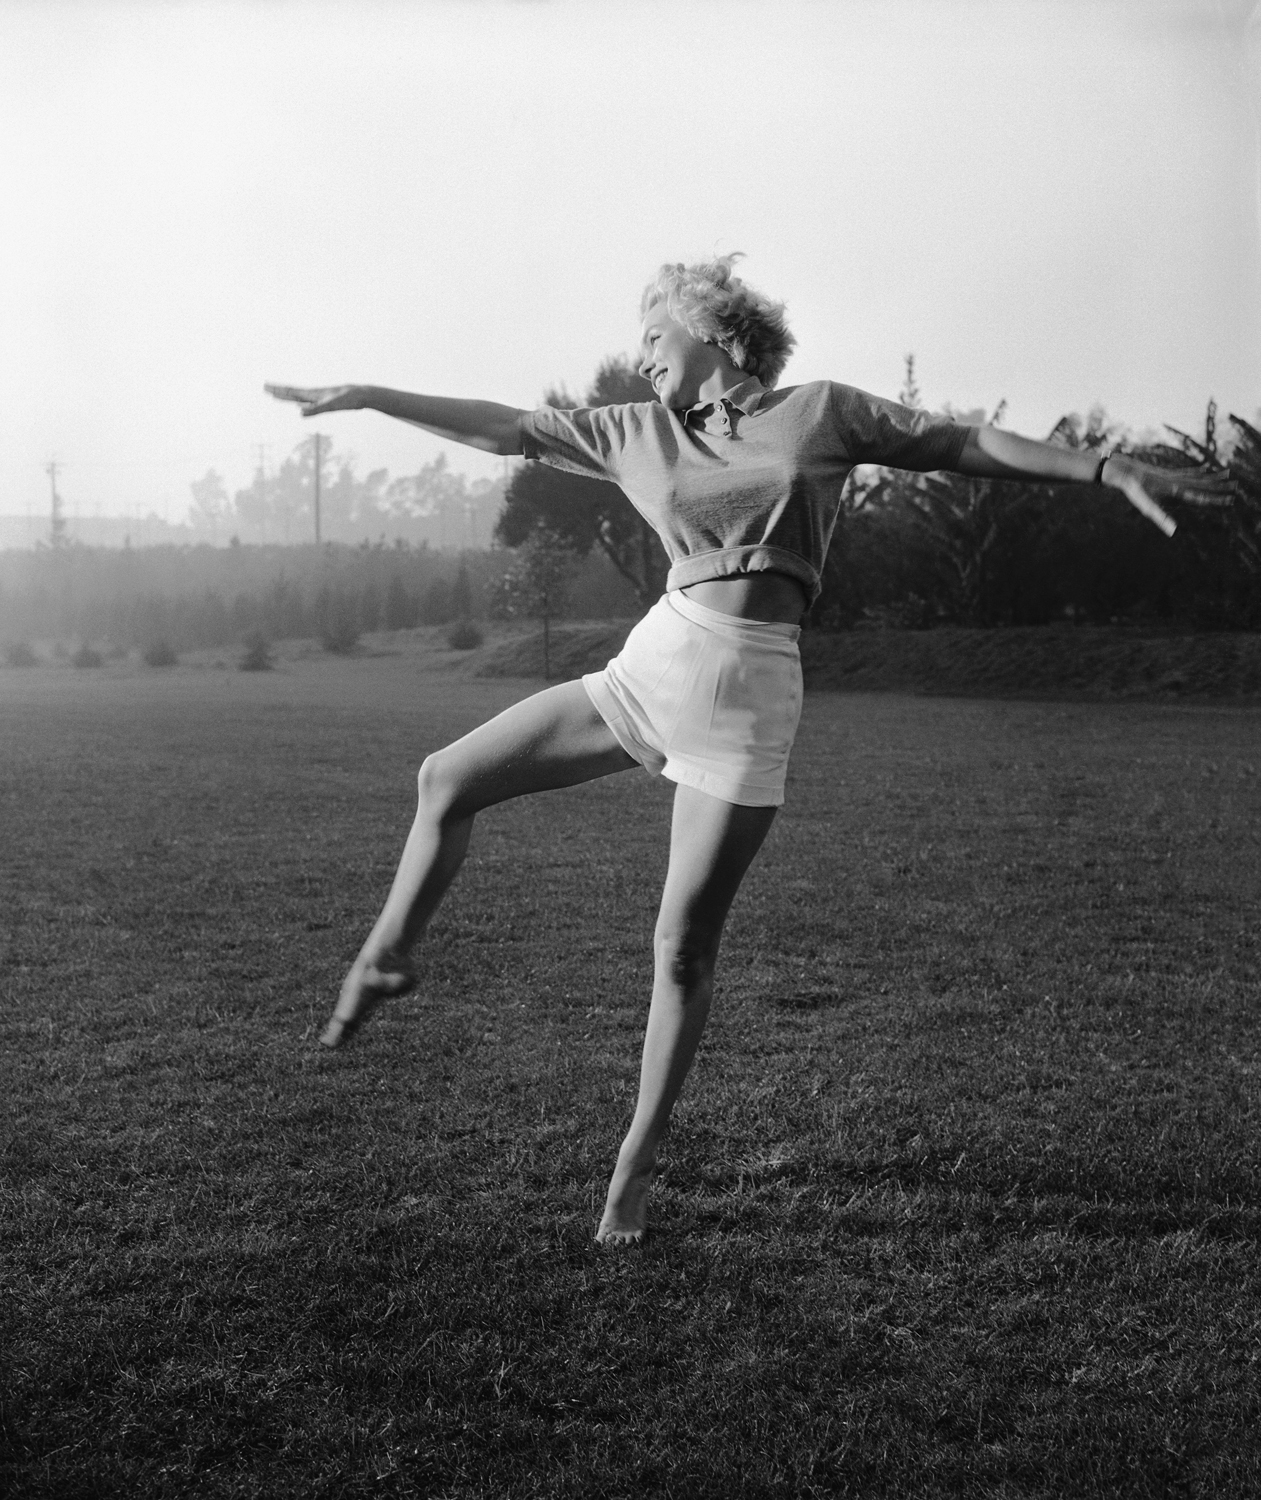 In bare feet, Monroe plays in a grassy field, circa 1955.